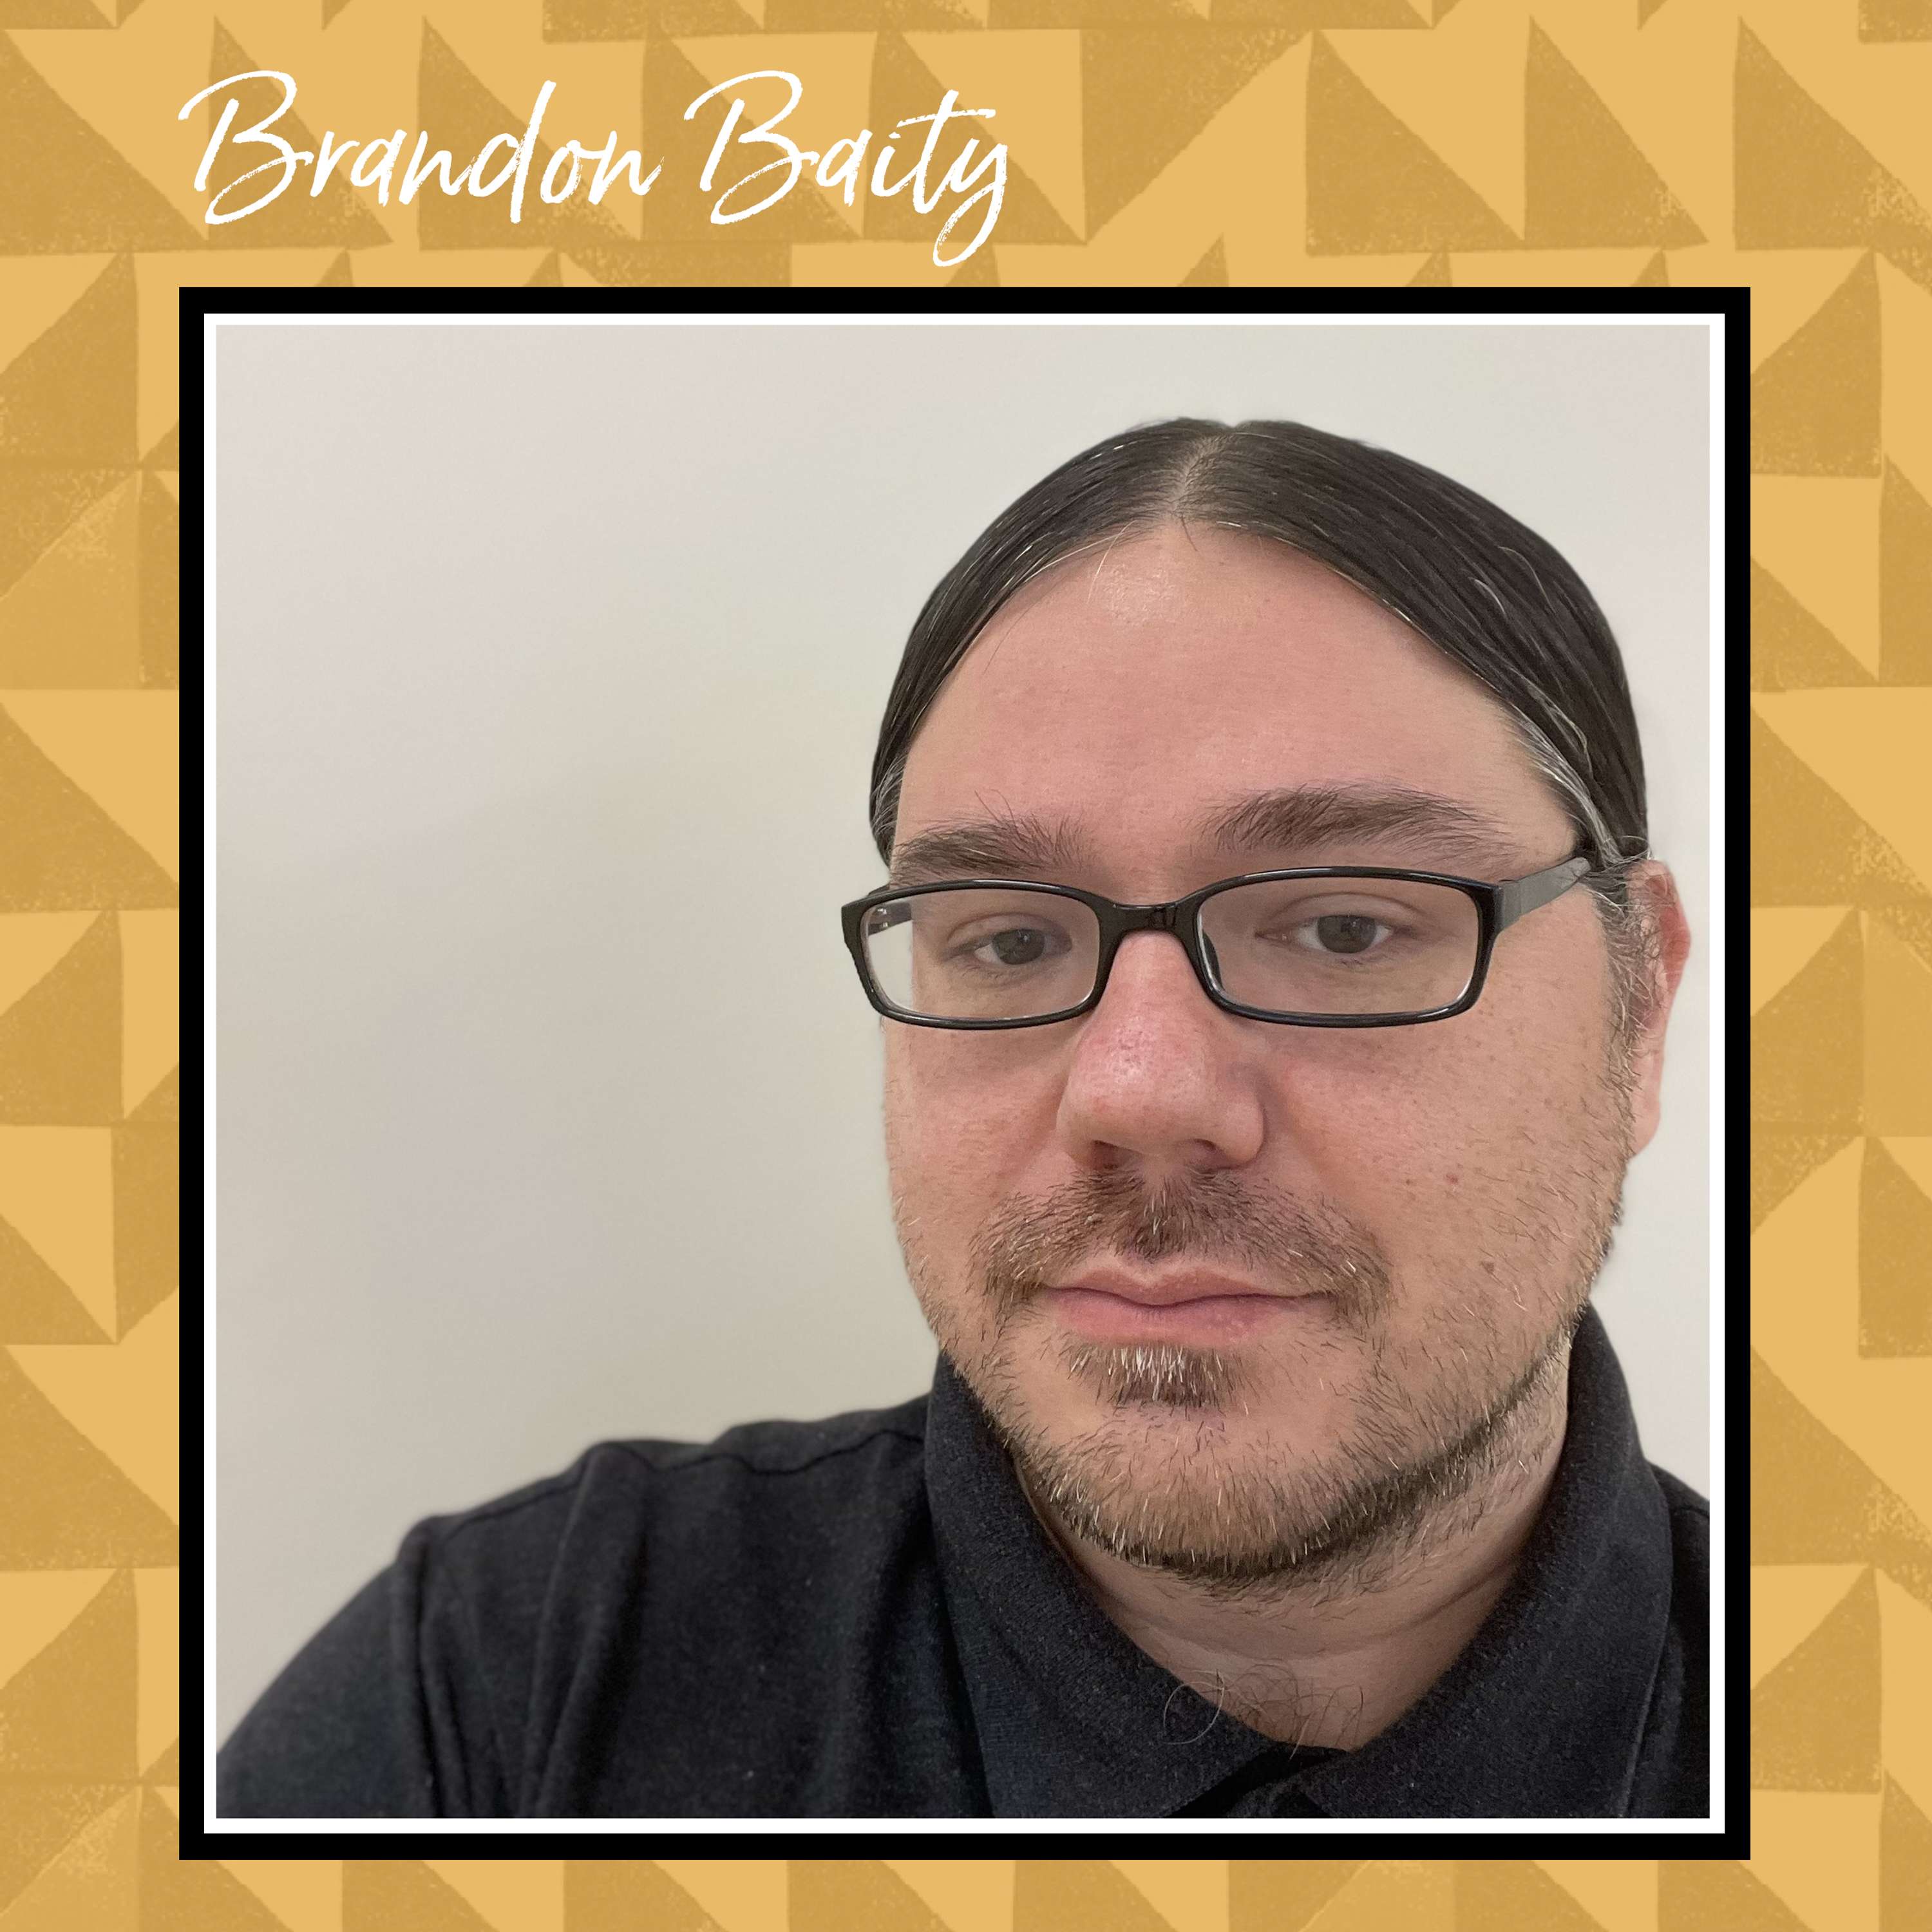 Brandon Baity: Executive Director of the Indigenous Association